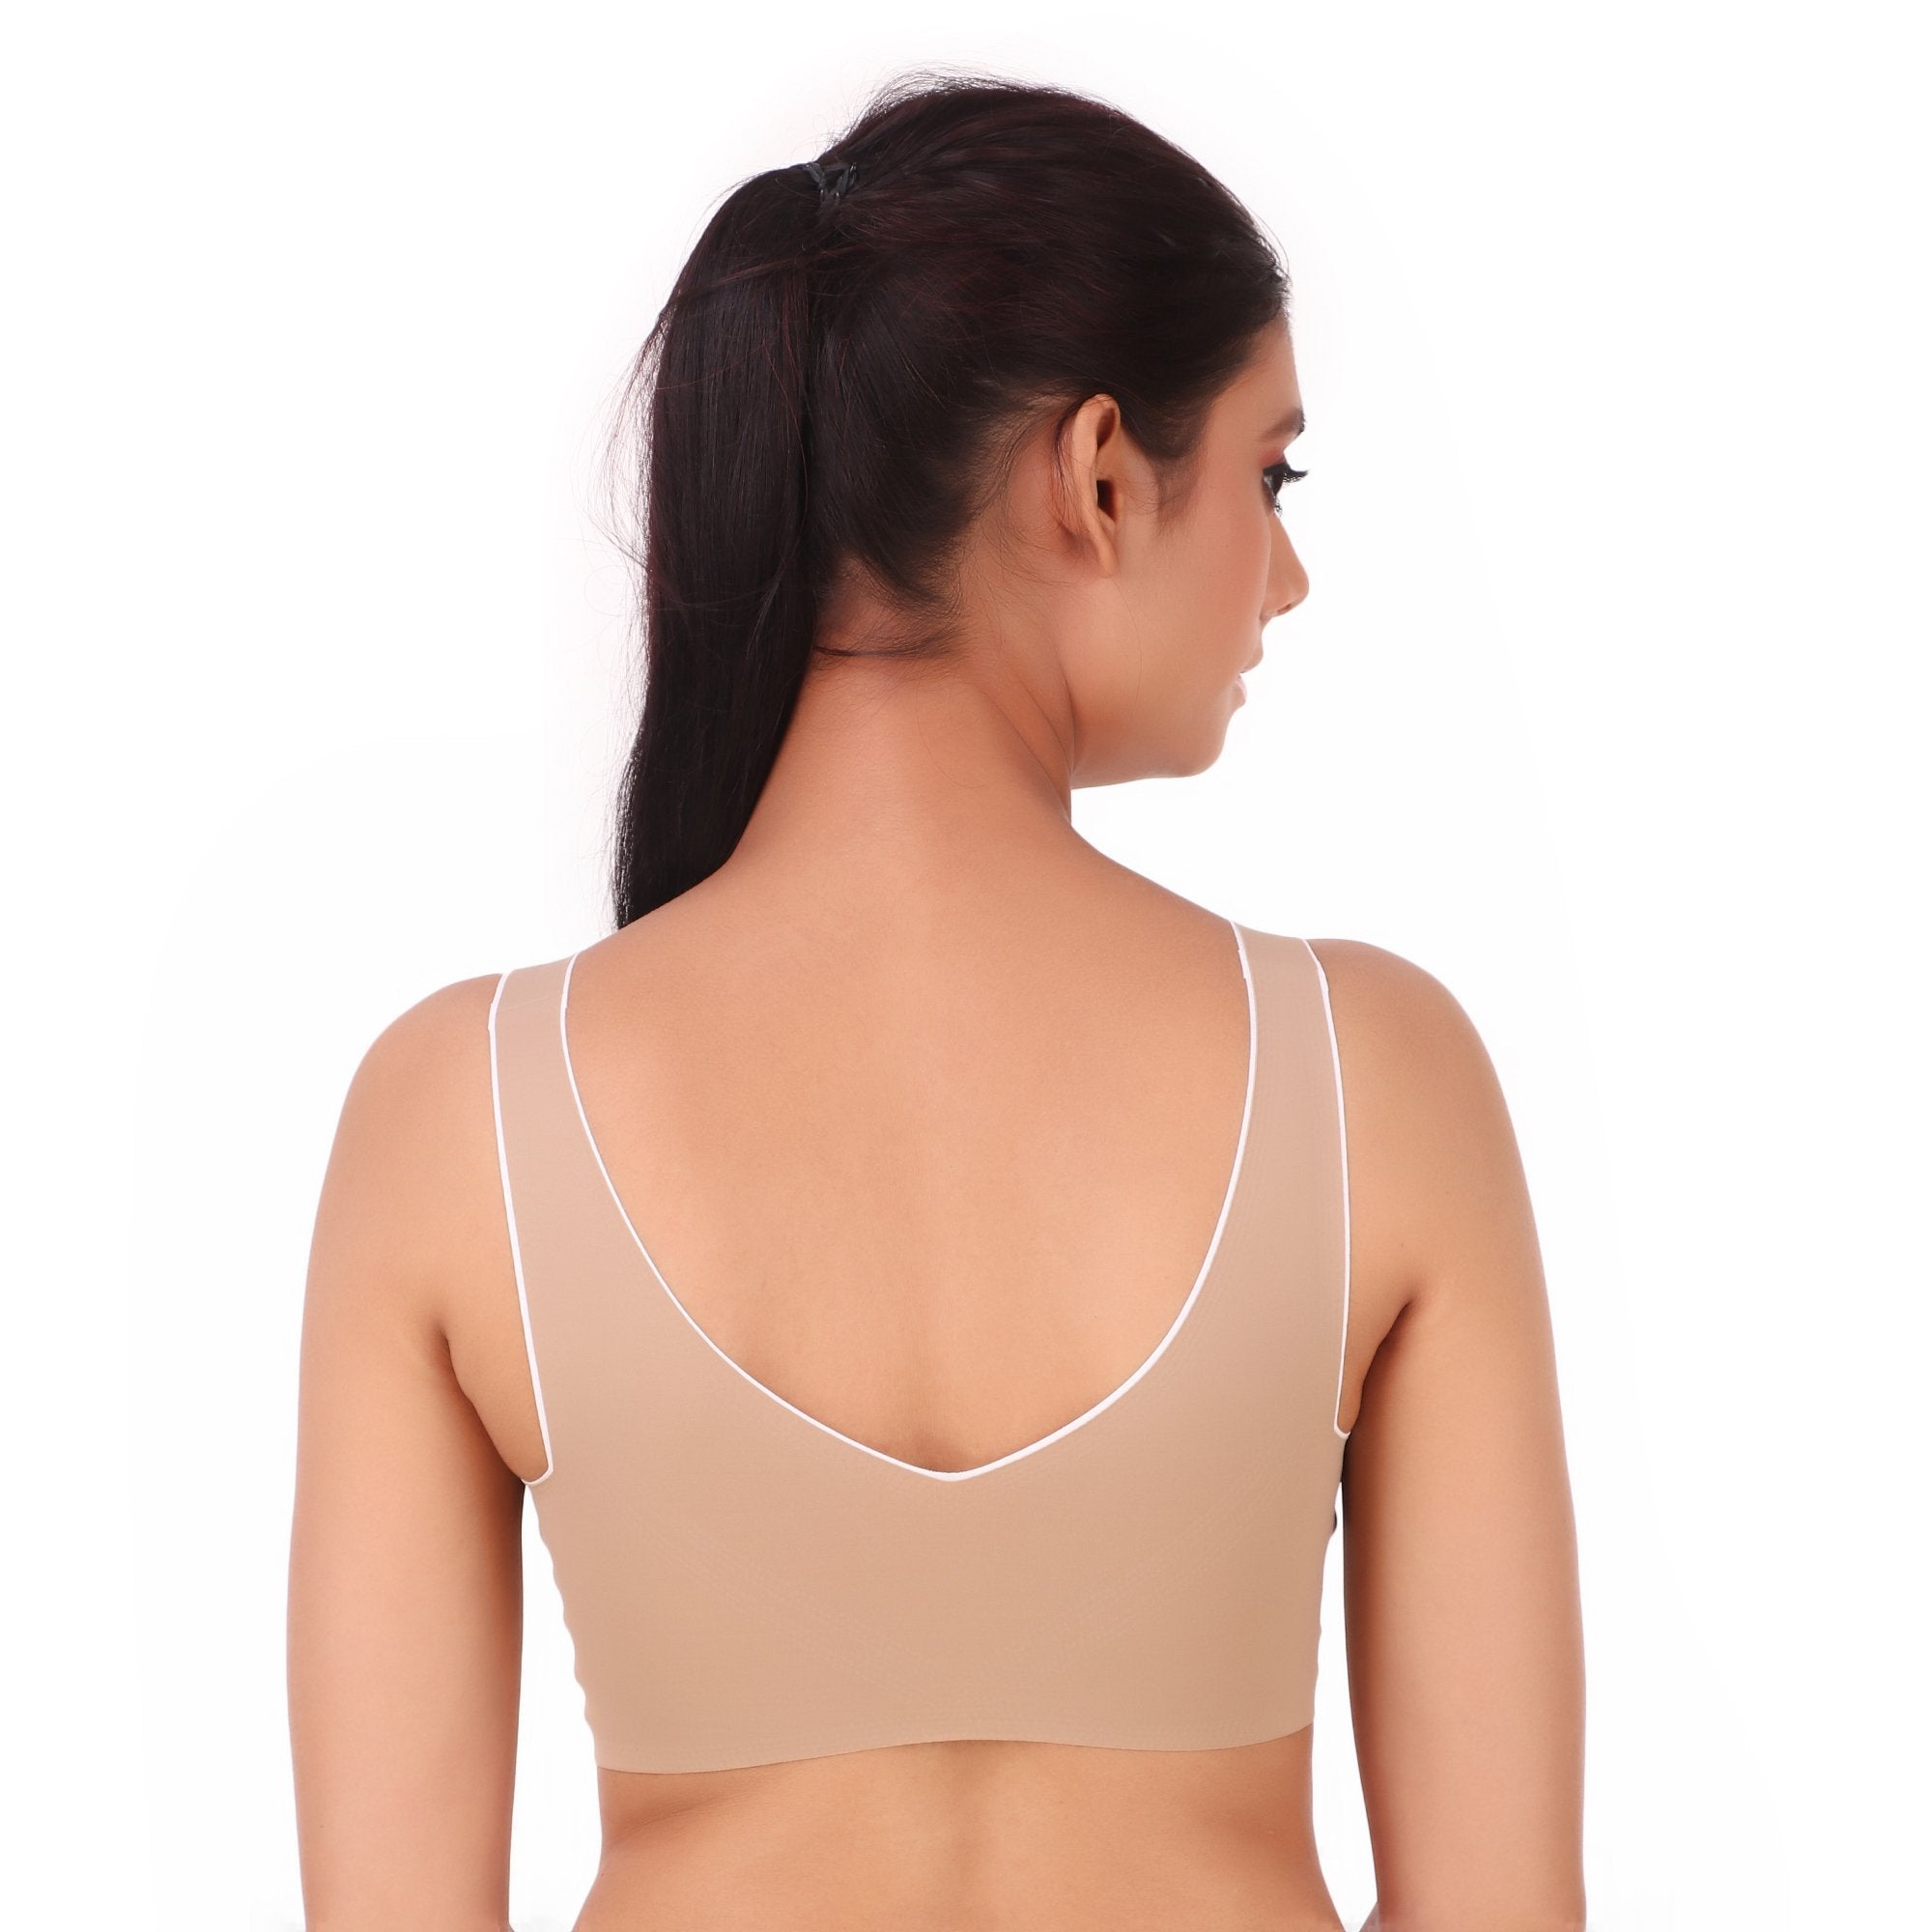 AXTZH-XBRA139 Drop shipping Hipster Women's Comfort Push Up Seamless corset top Wireless bra